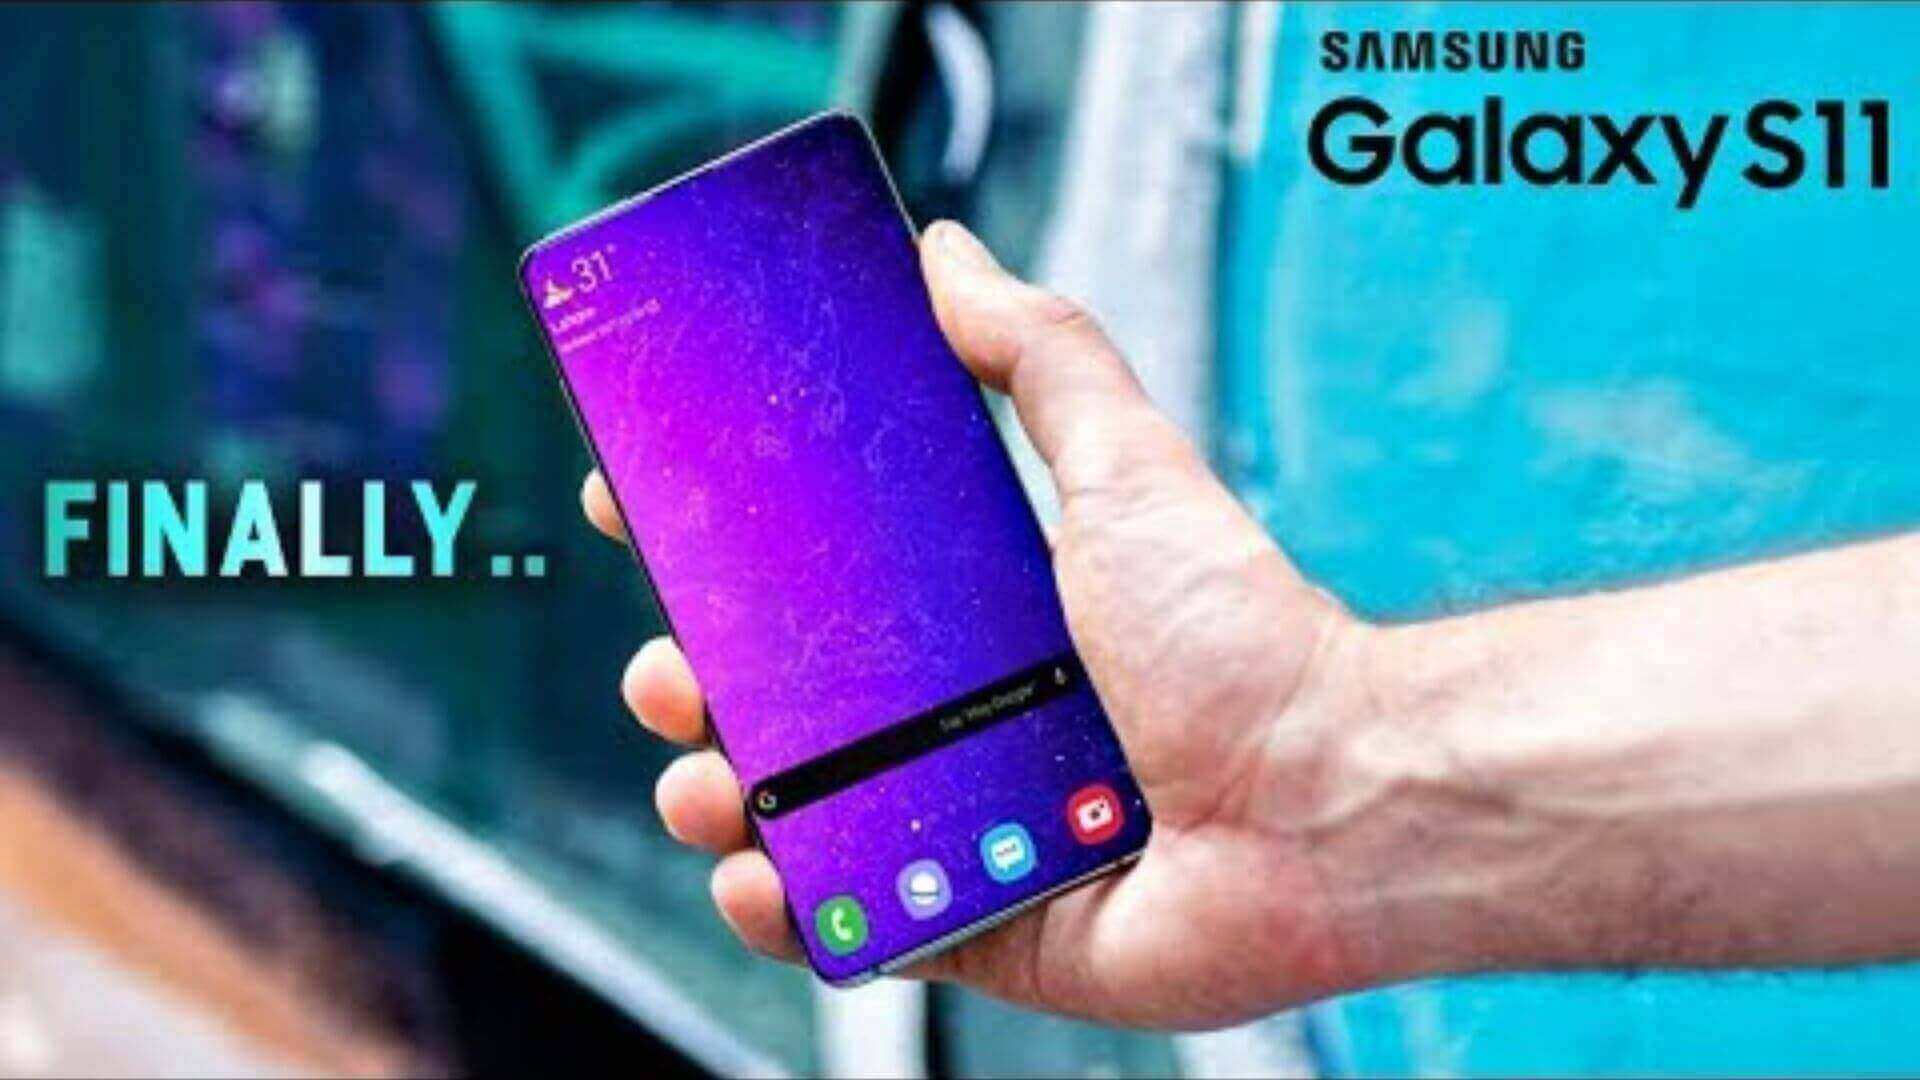 Samsung Galaxy S11 series